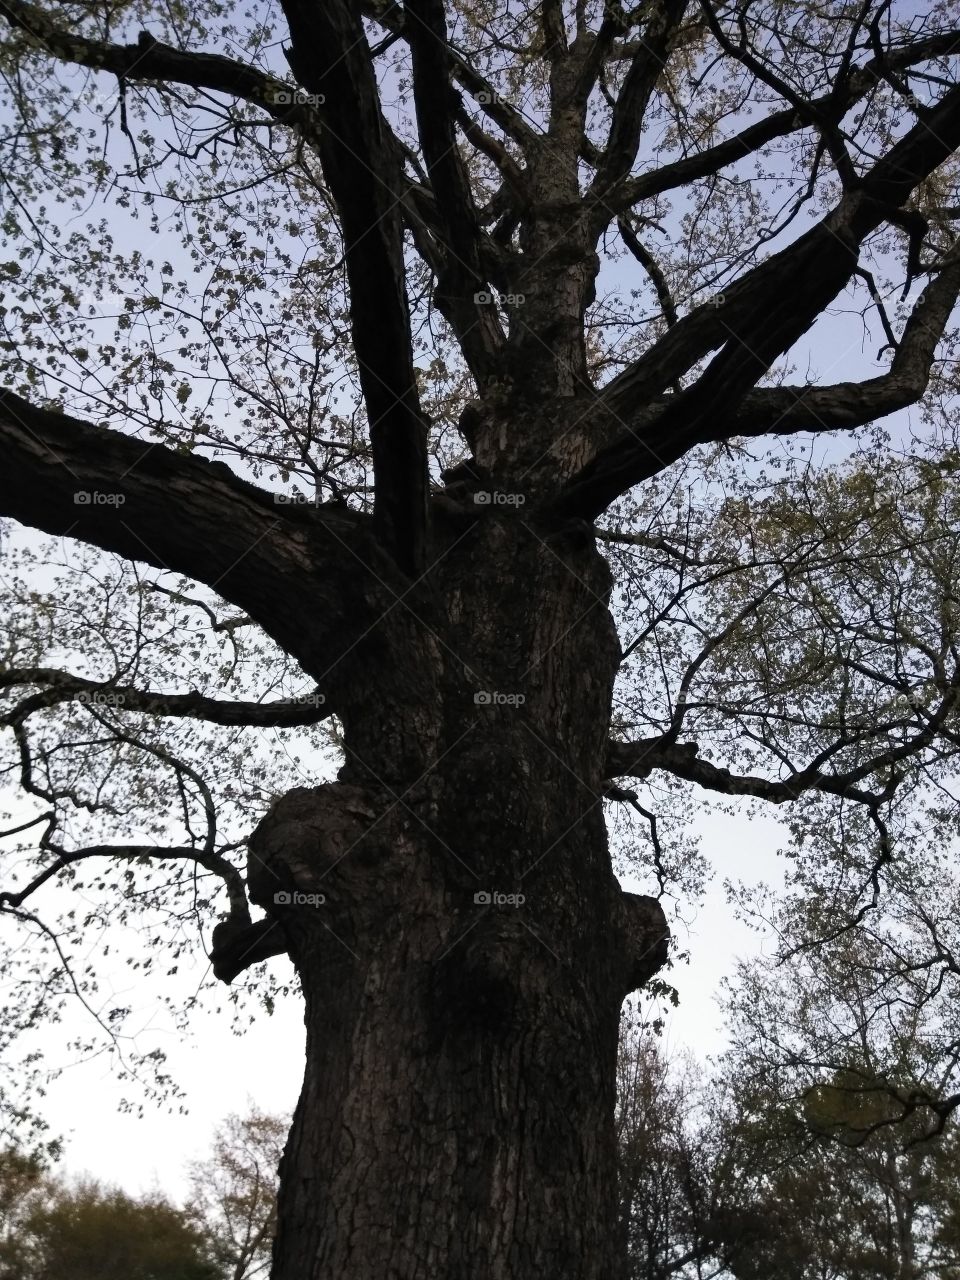 Ancient oak tree siloette with dusk lighting